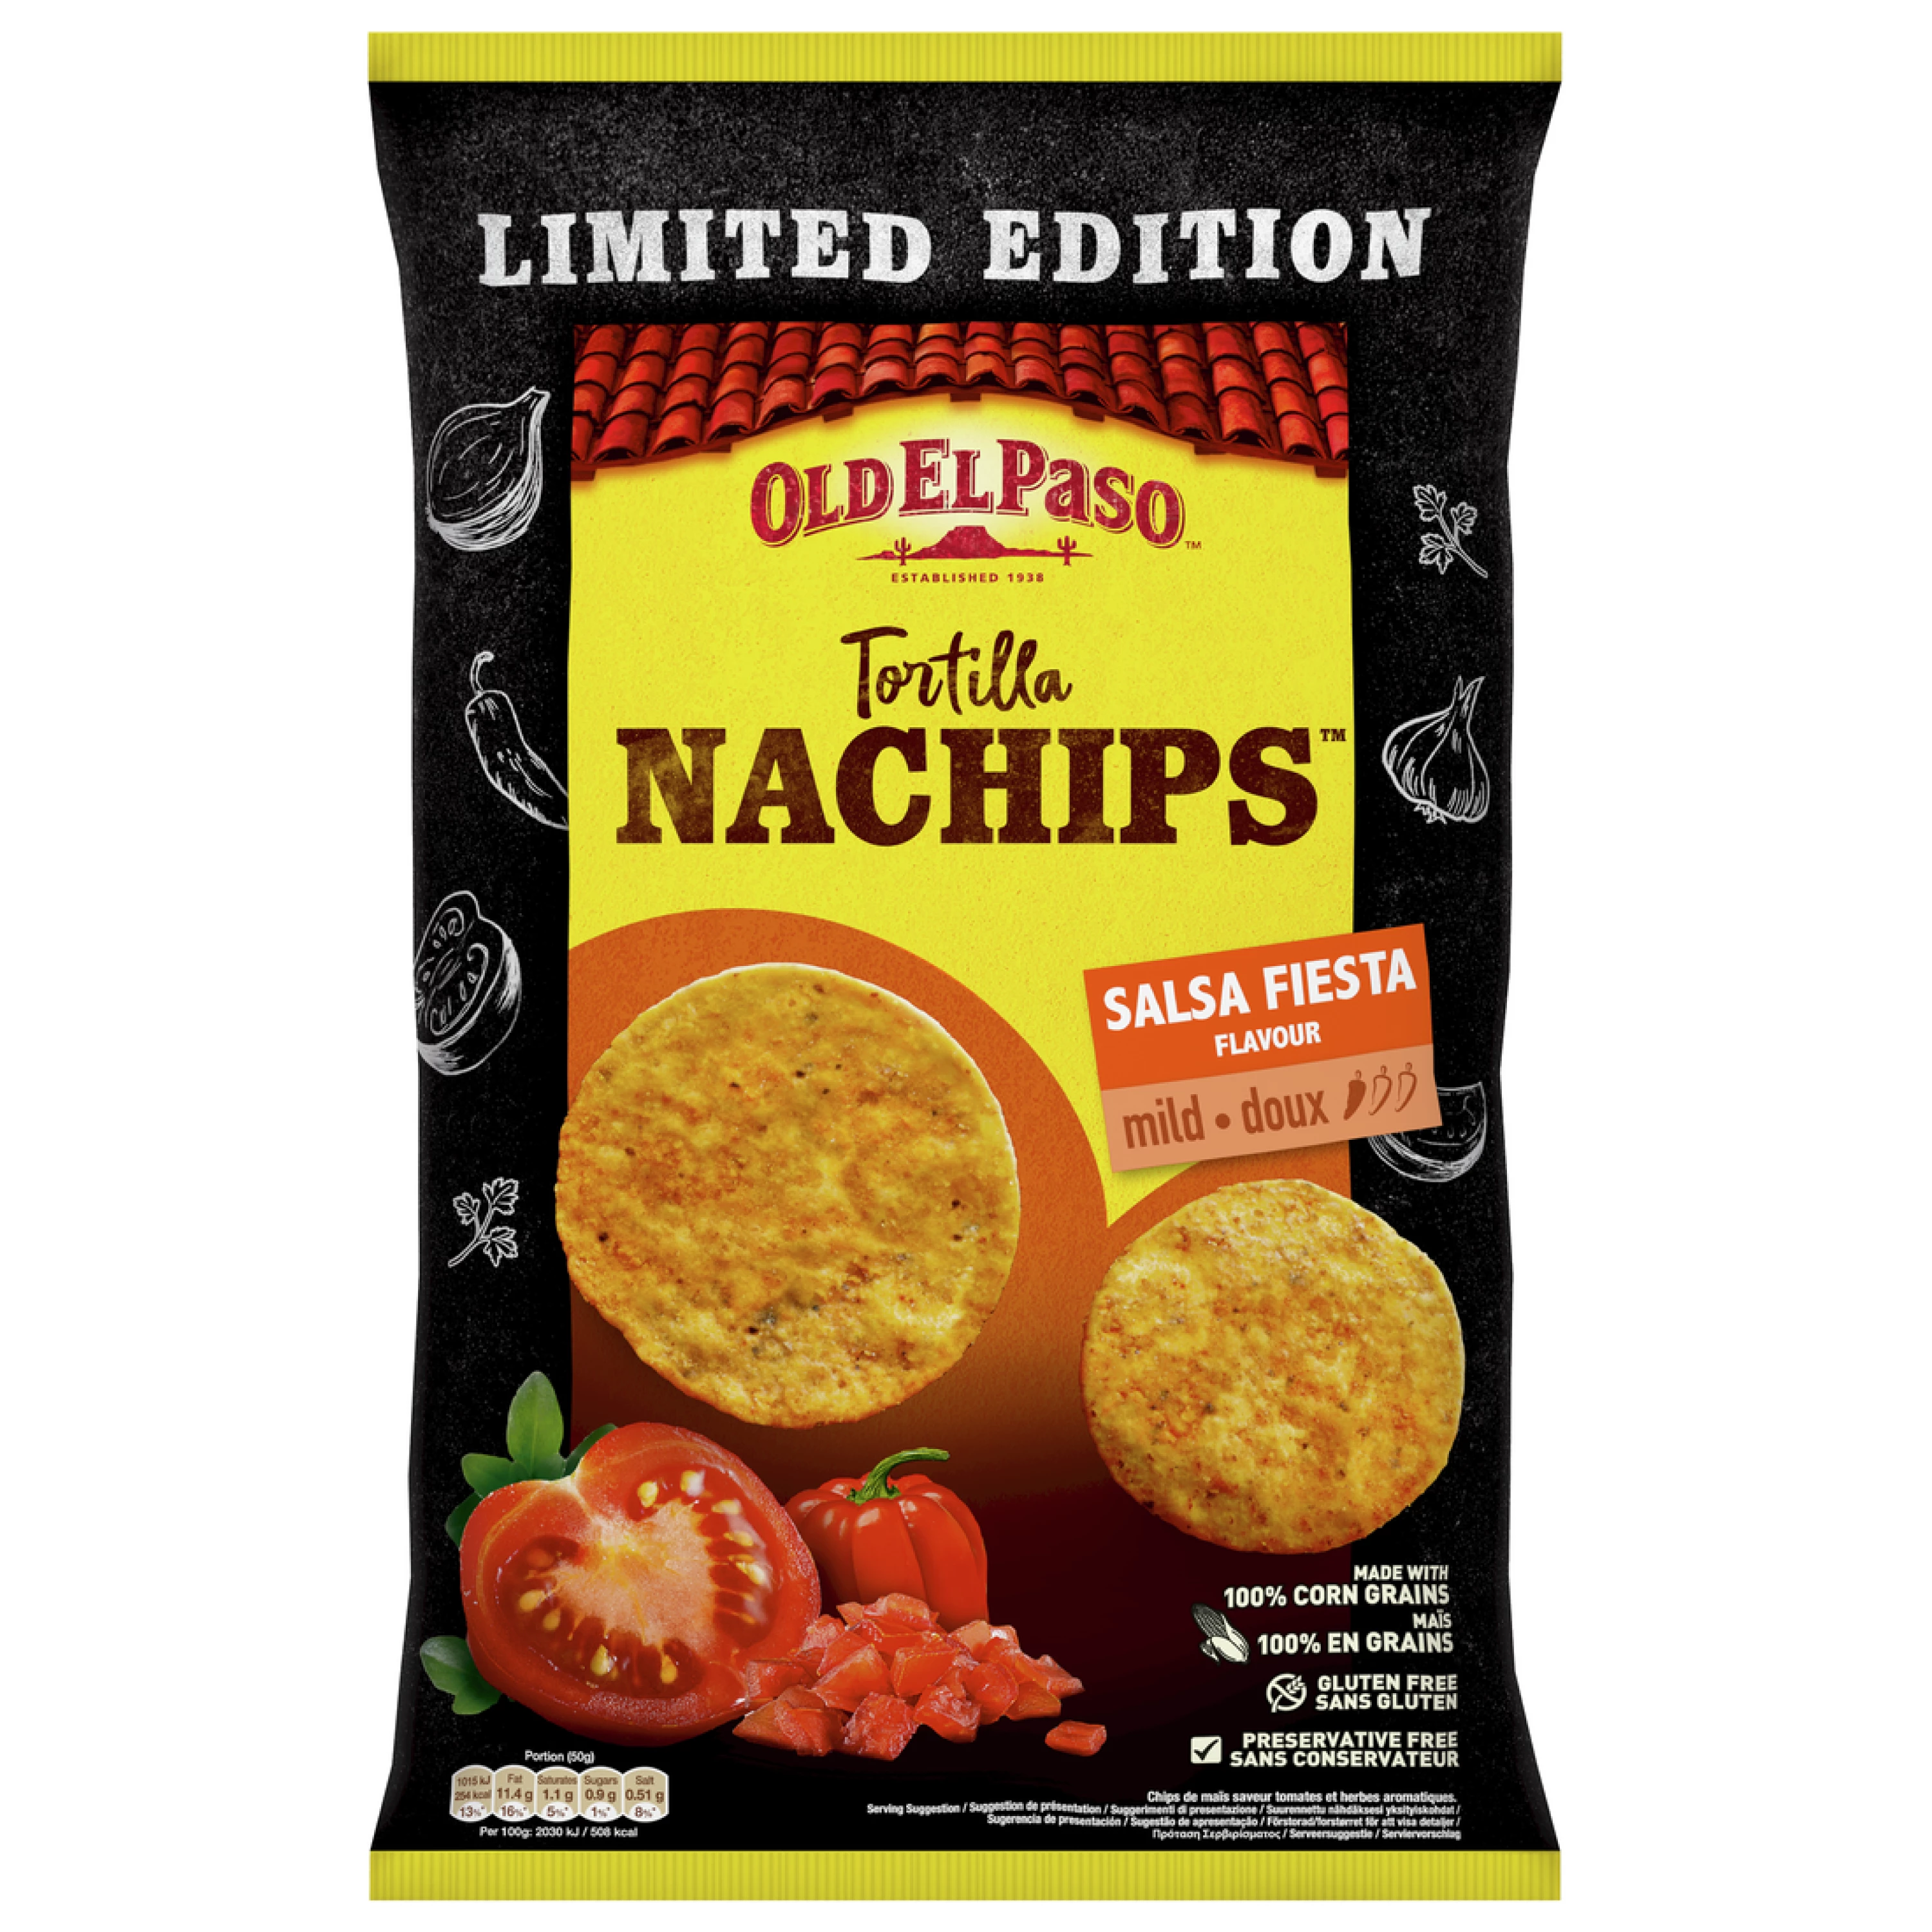 Nachips Mexi Salsa 185g